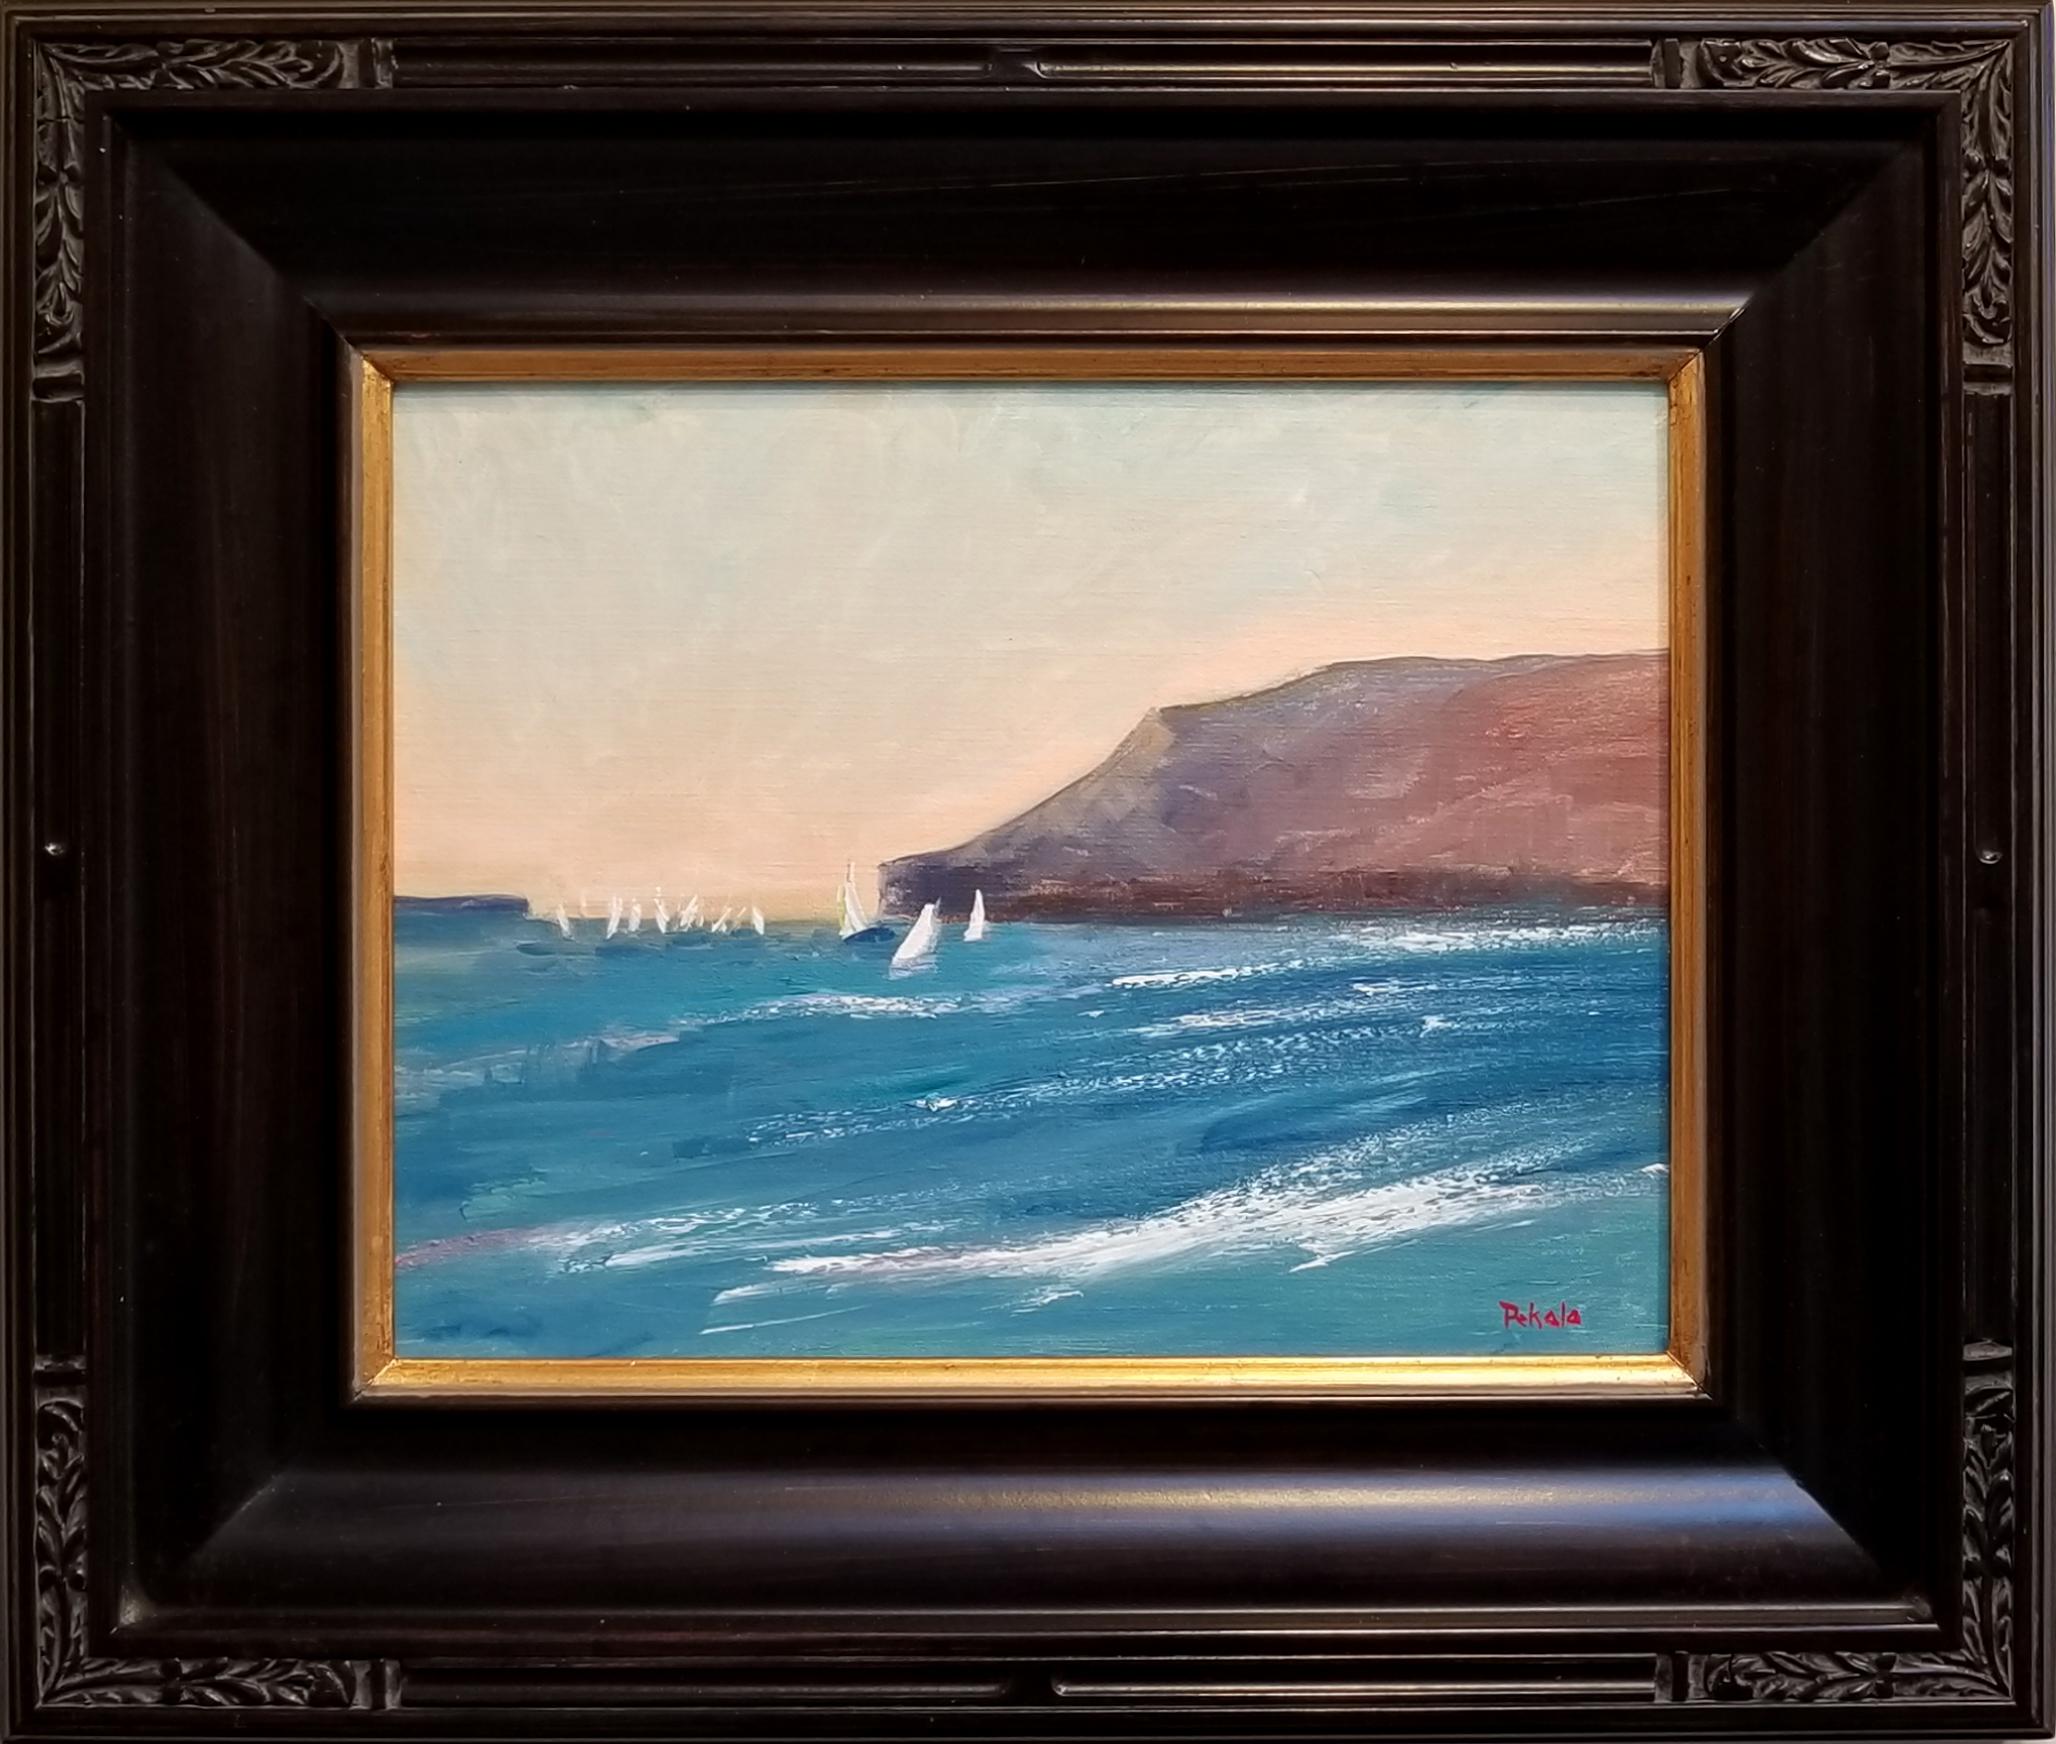 Joyce Pekala Landscape Painting - Sail Away